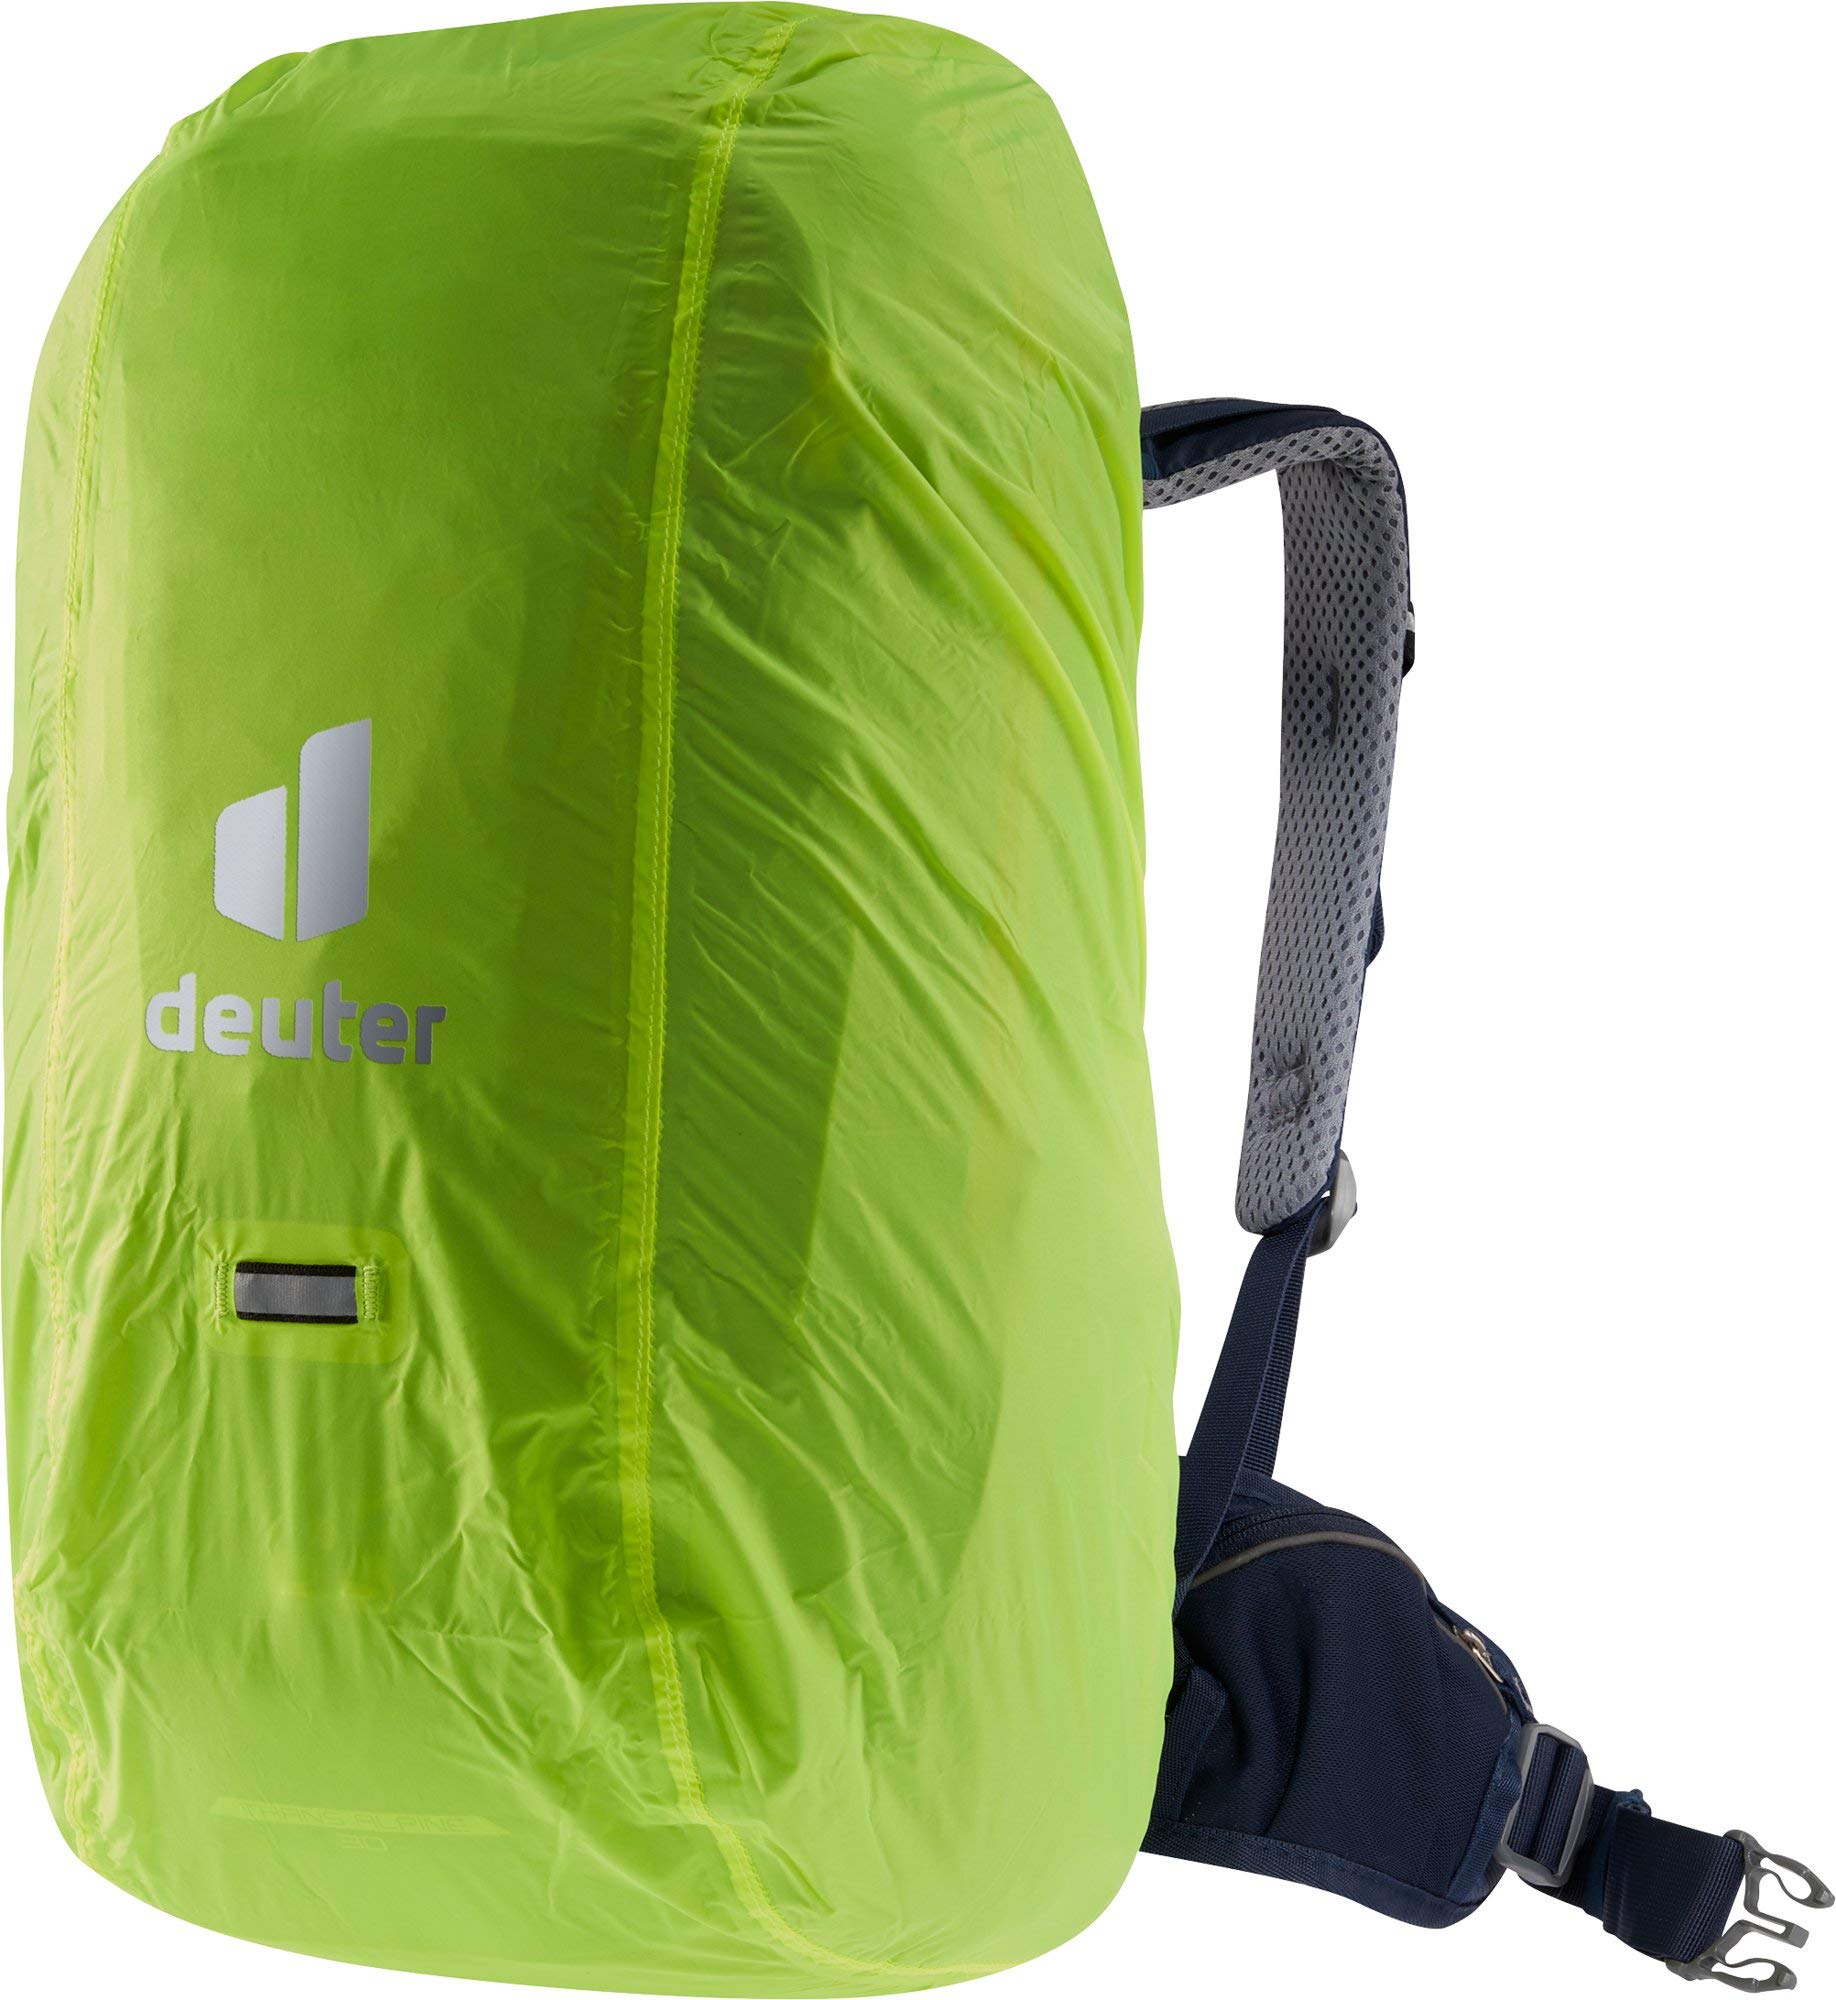 DEUTER Unisex – Adult's Trans Alpine 30 Bicycle Backpack, Lapis Navy, 30 l